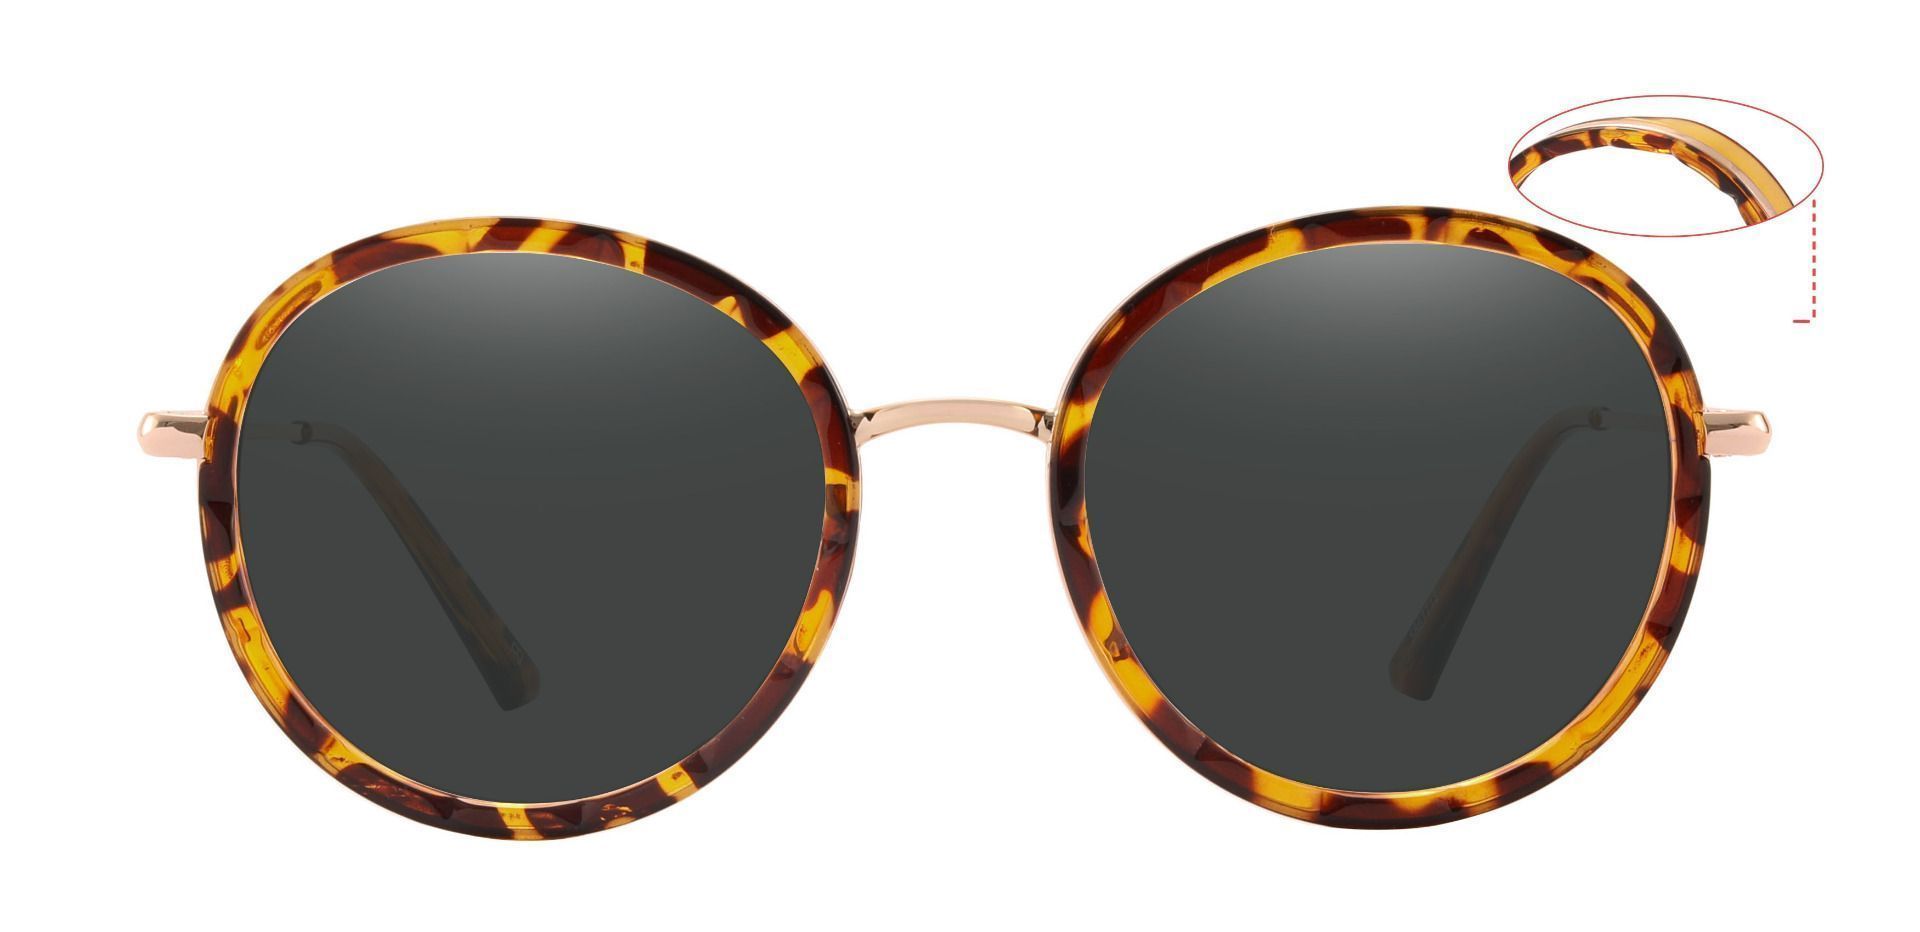 Claremore Round Prescription Sunglasses - Tortoise Frame With Gray Lenses